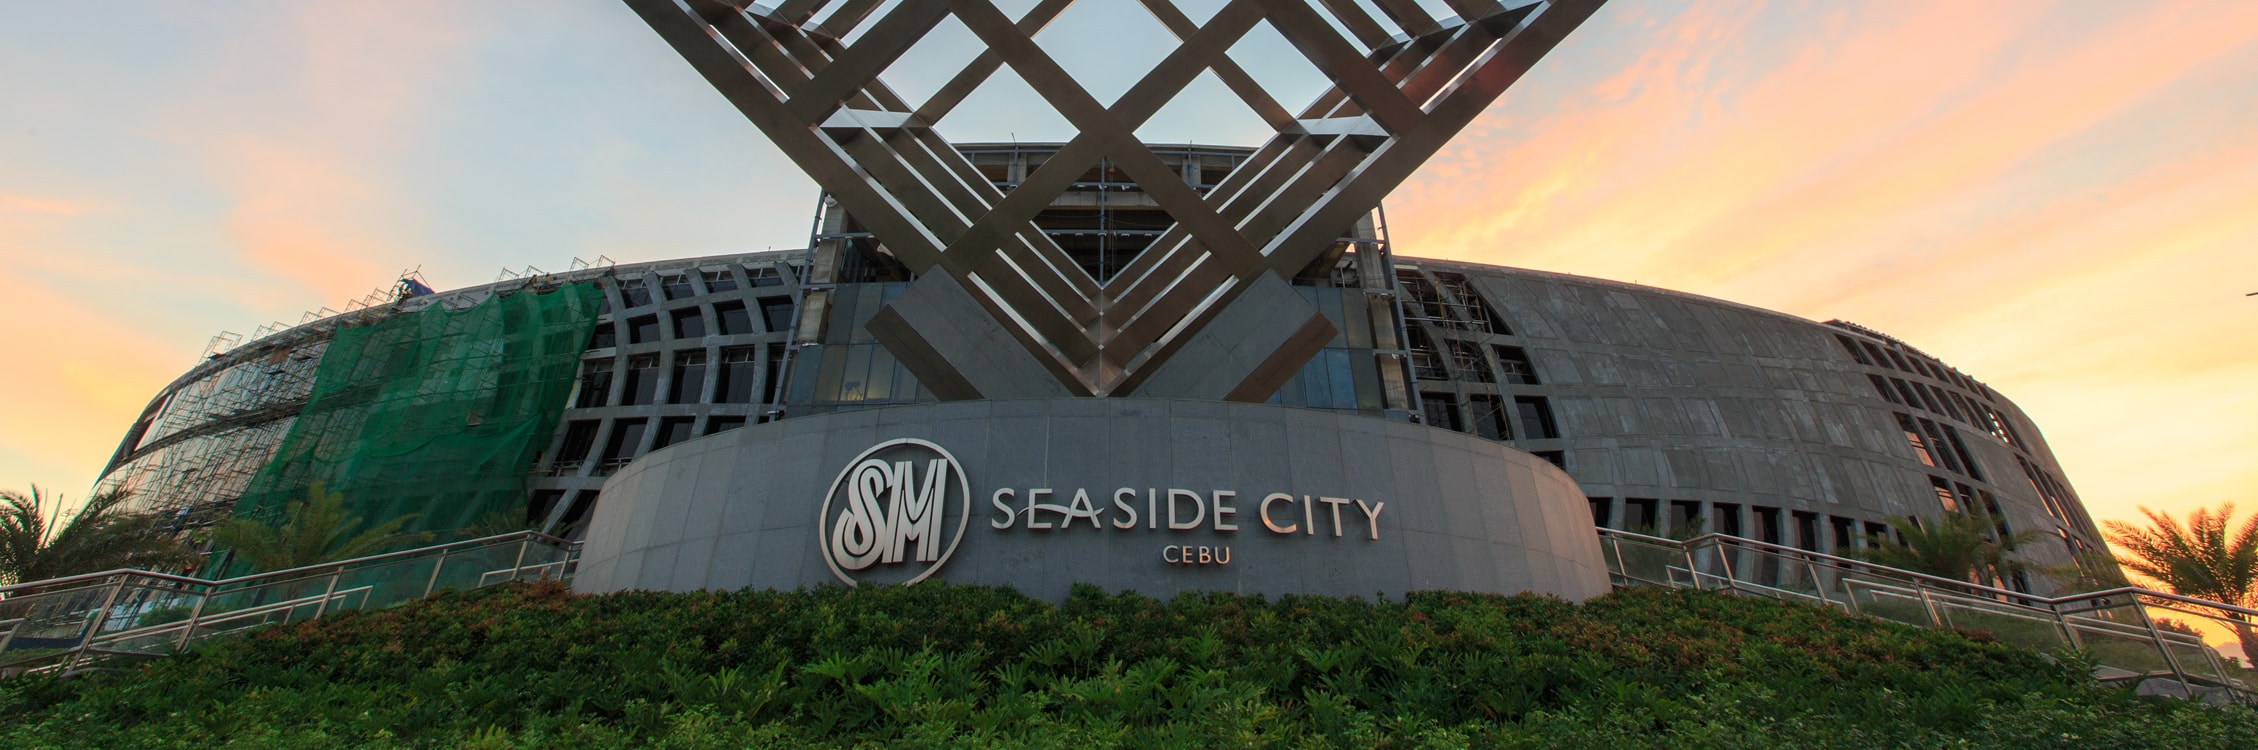 SM Seaside City Cebu